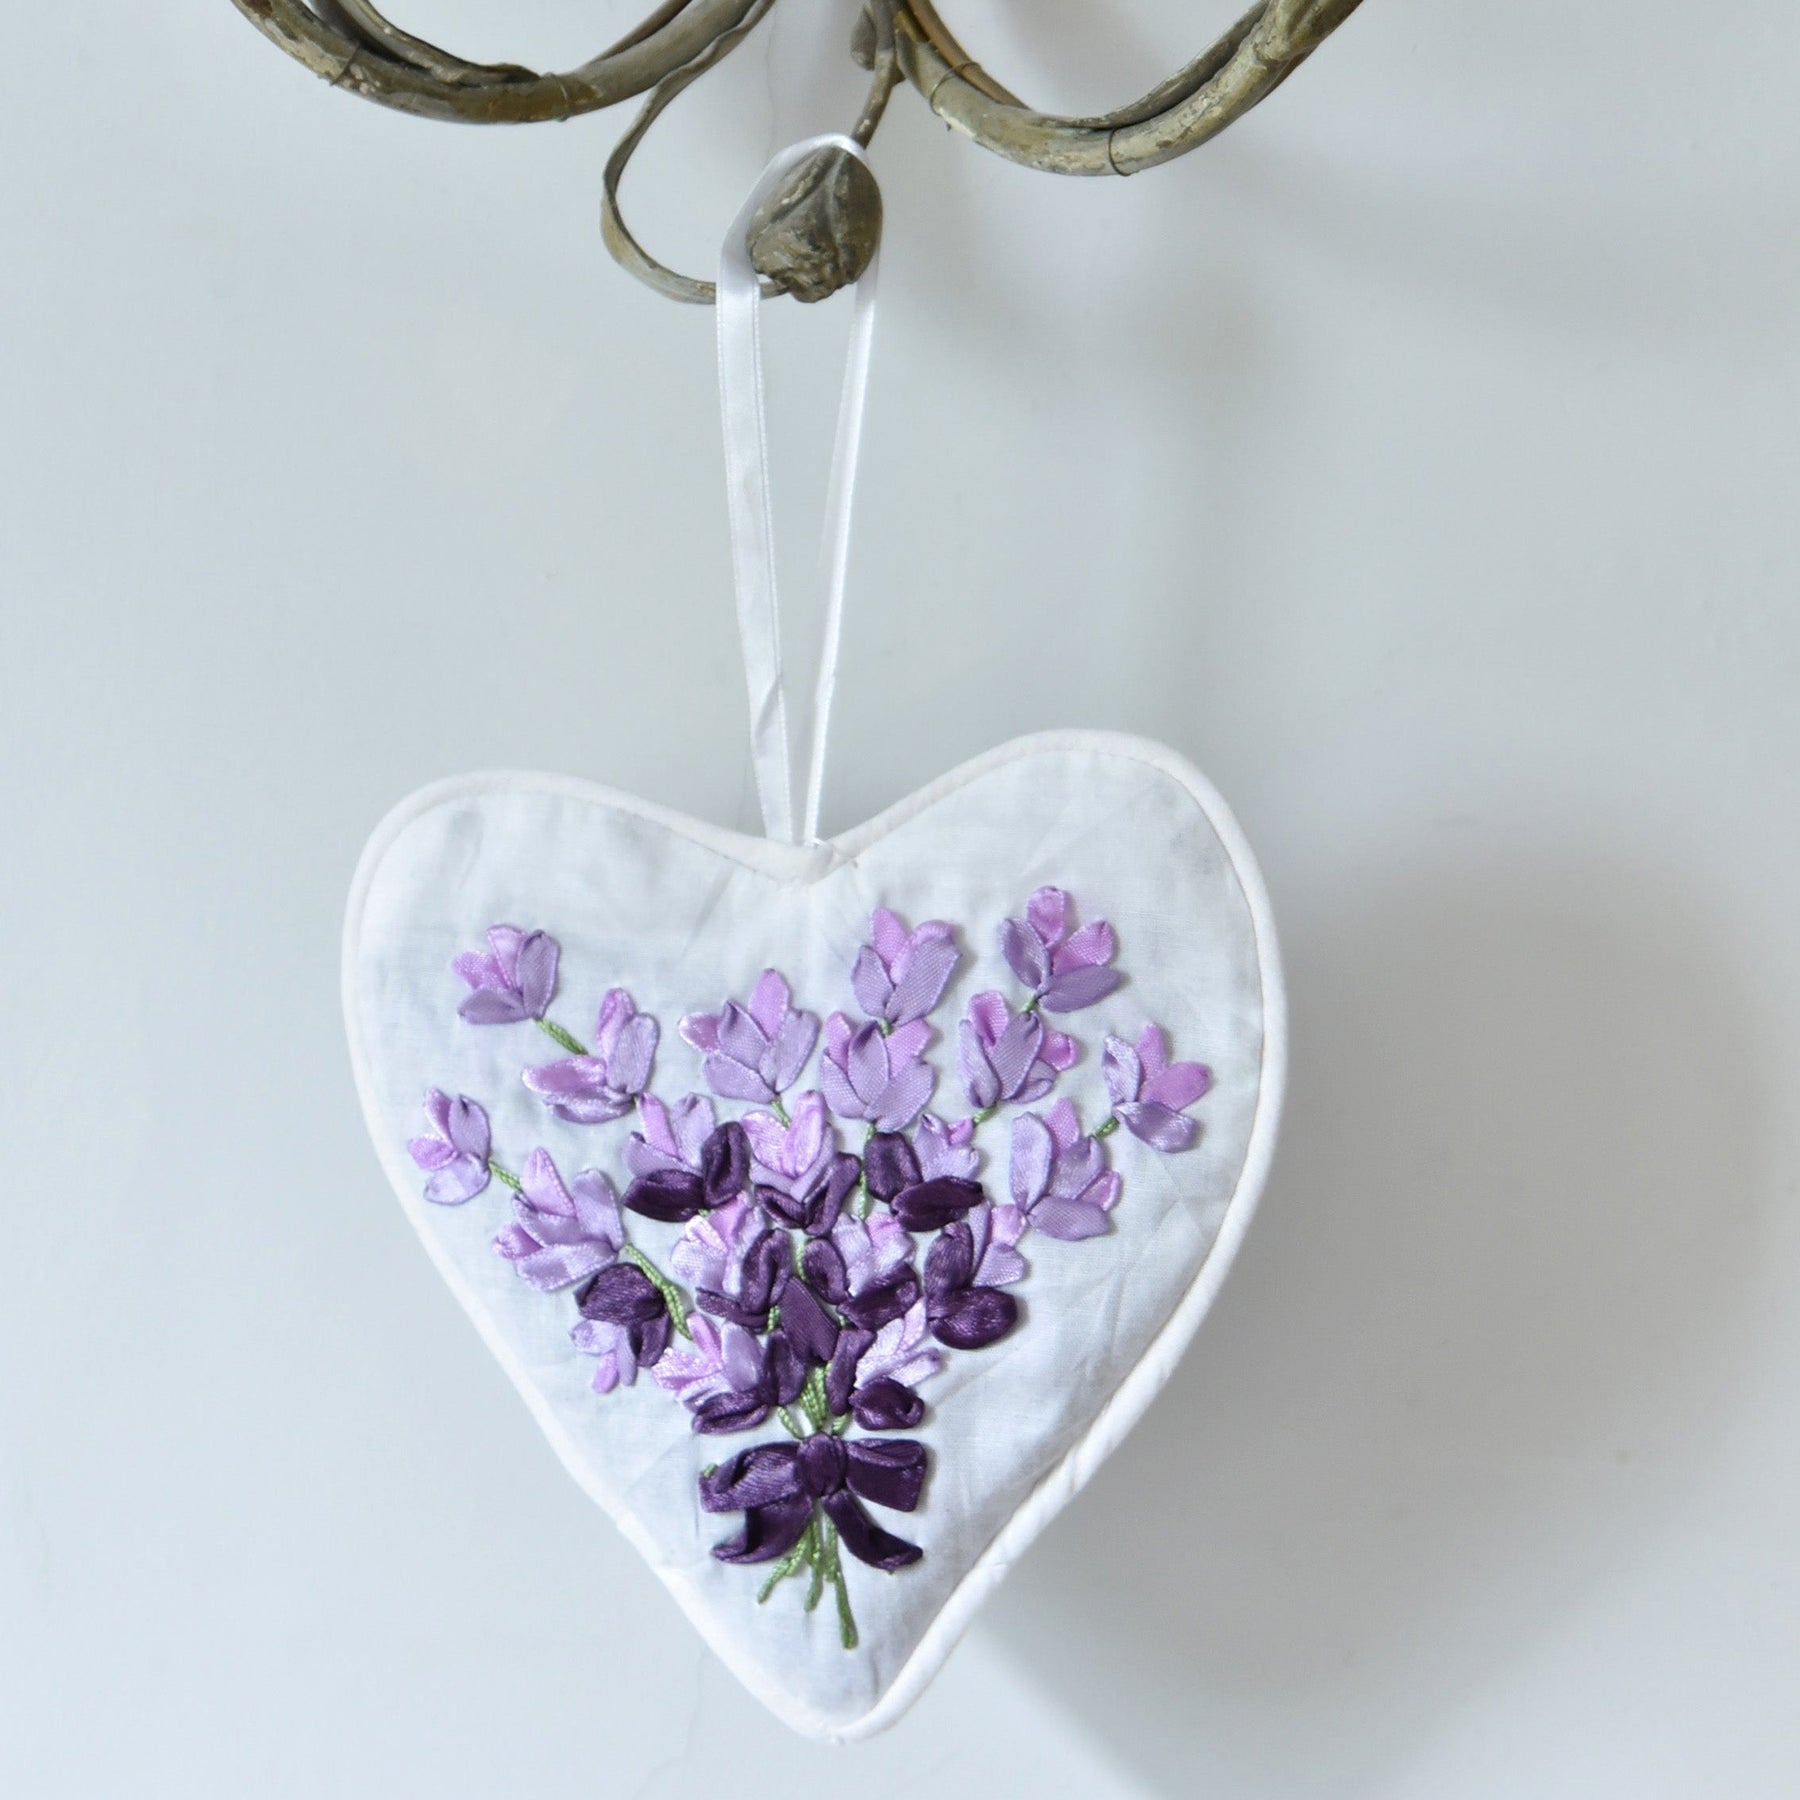 Pack of 2 Lavender Ribbon Embroidered Heart Sachet